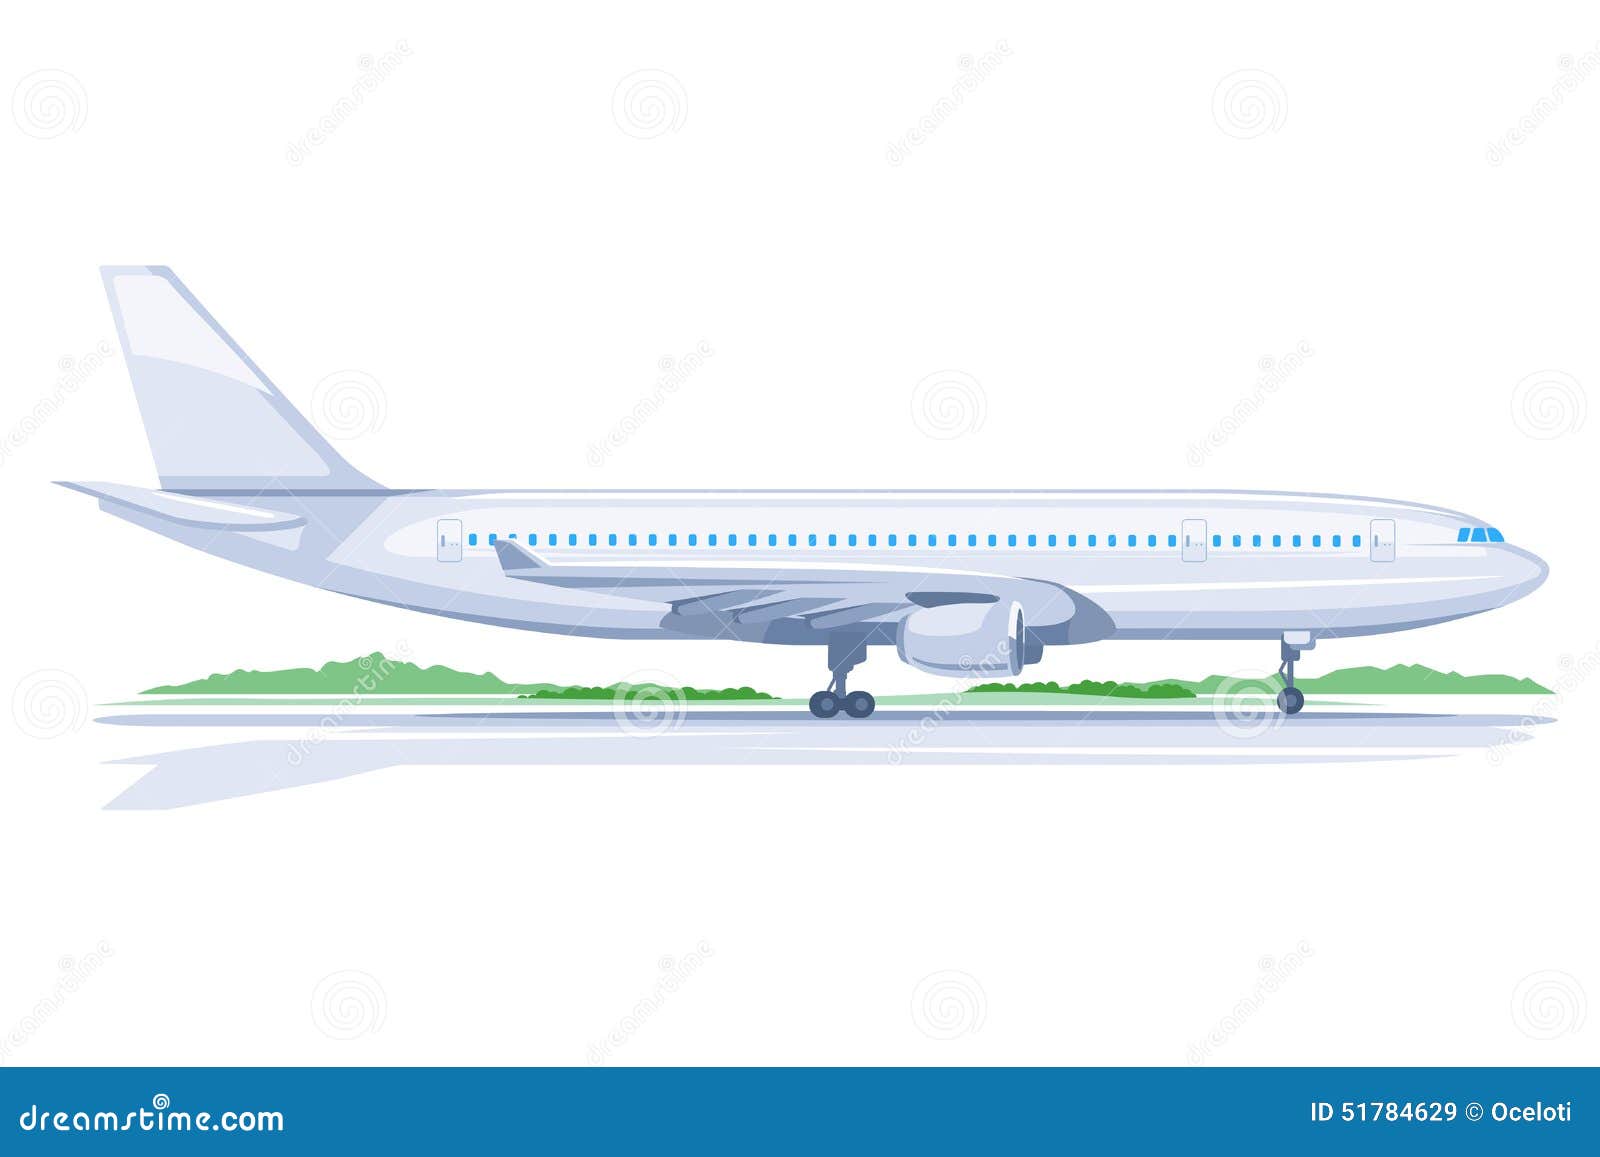 airplane-ground-one-light-big-passenger-